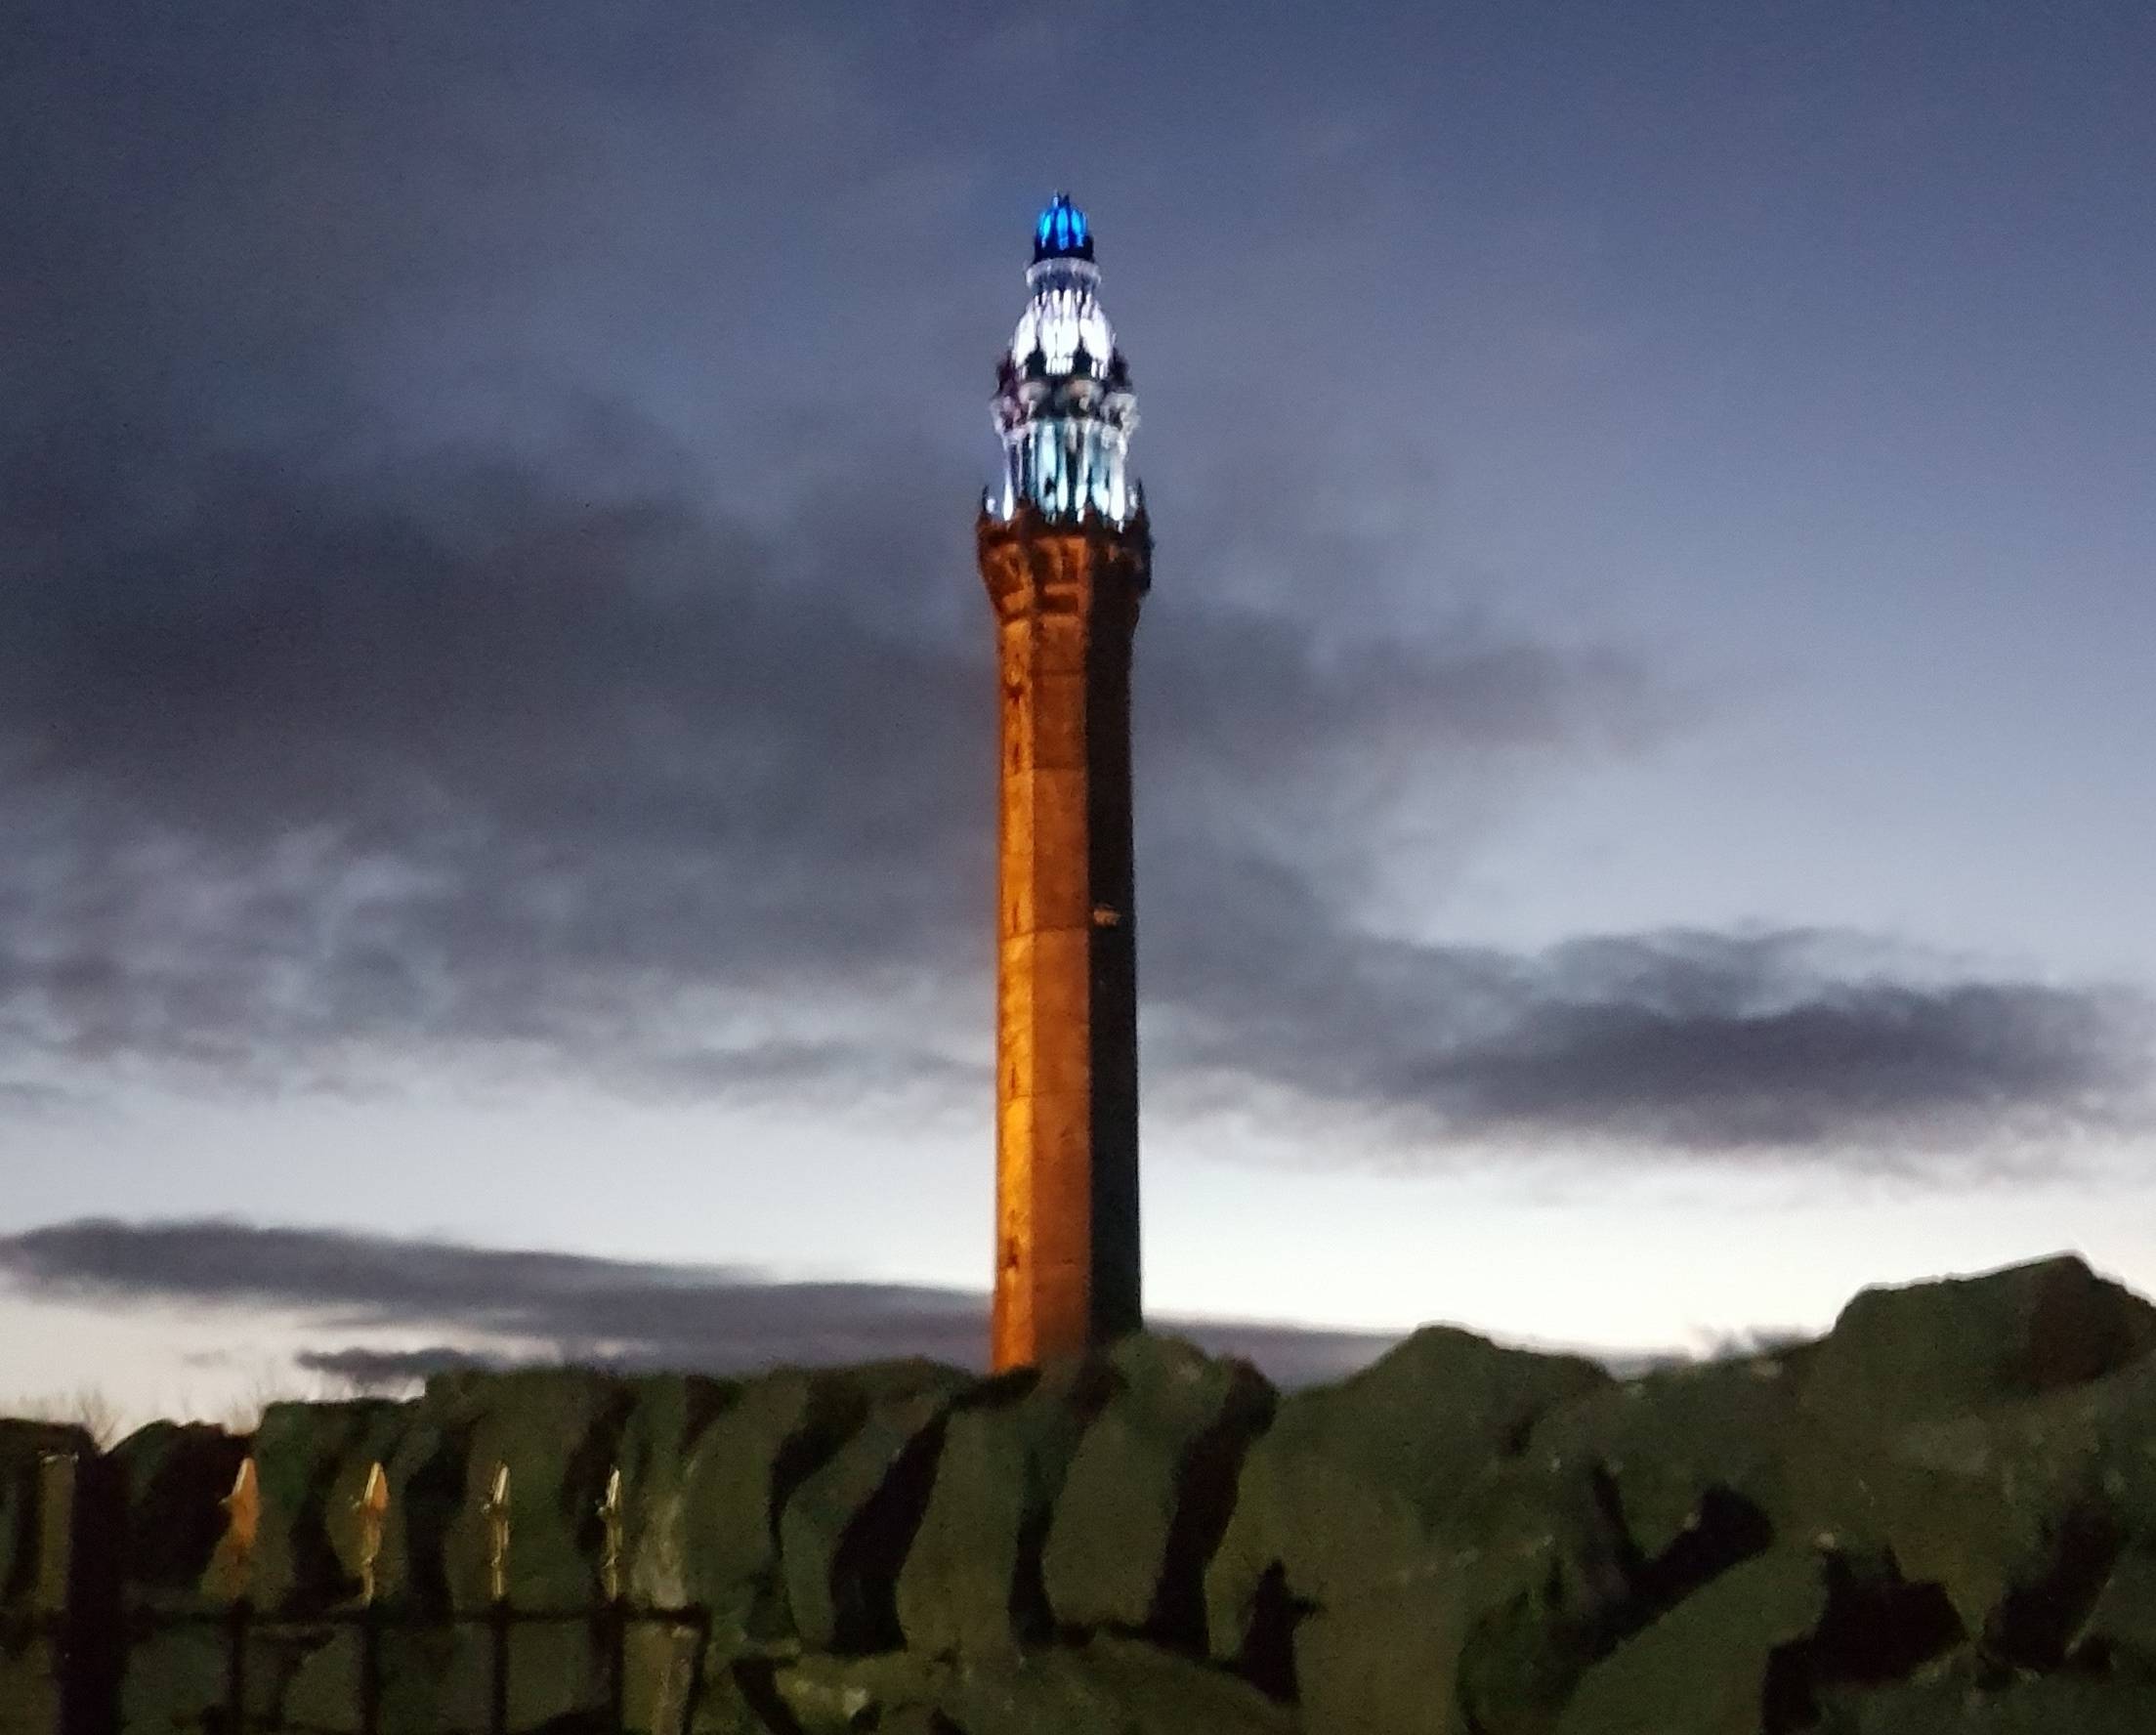 Wainhouse Tower lit up blue